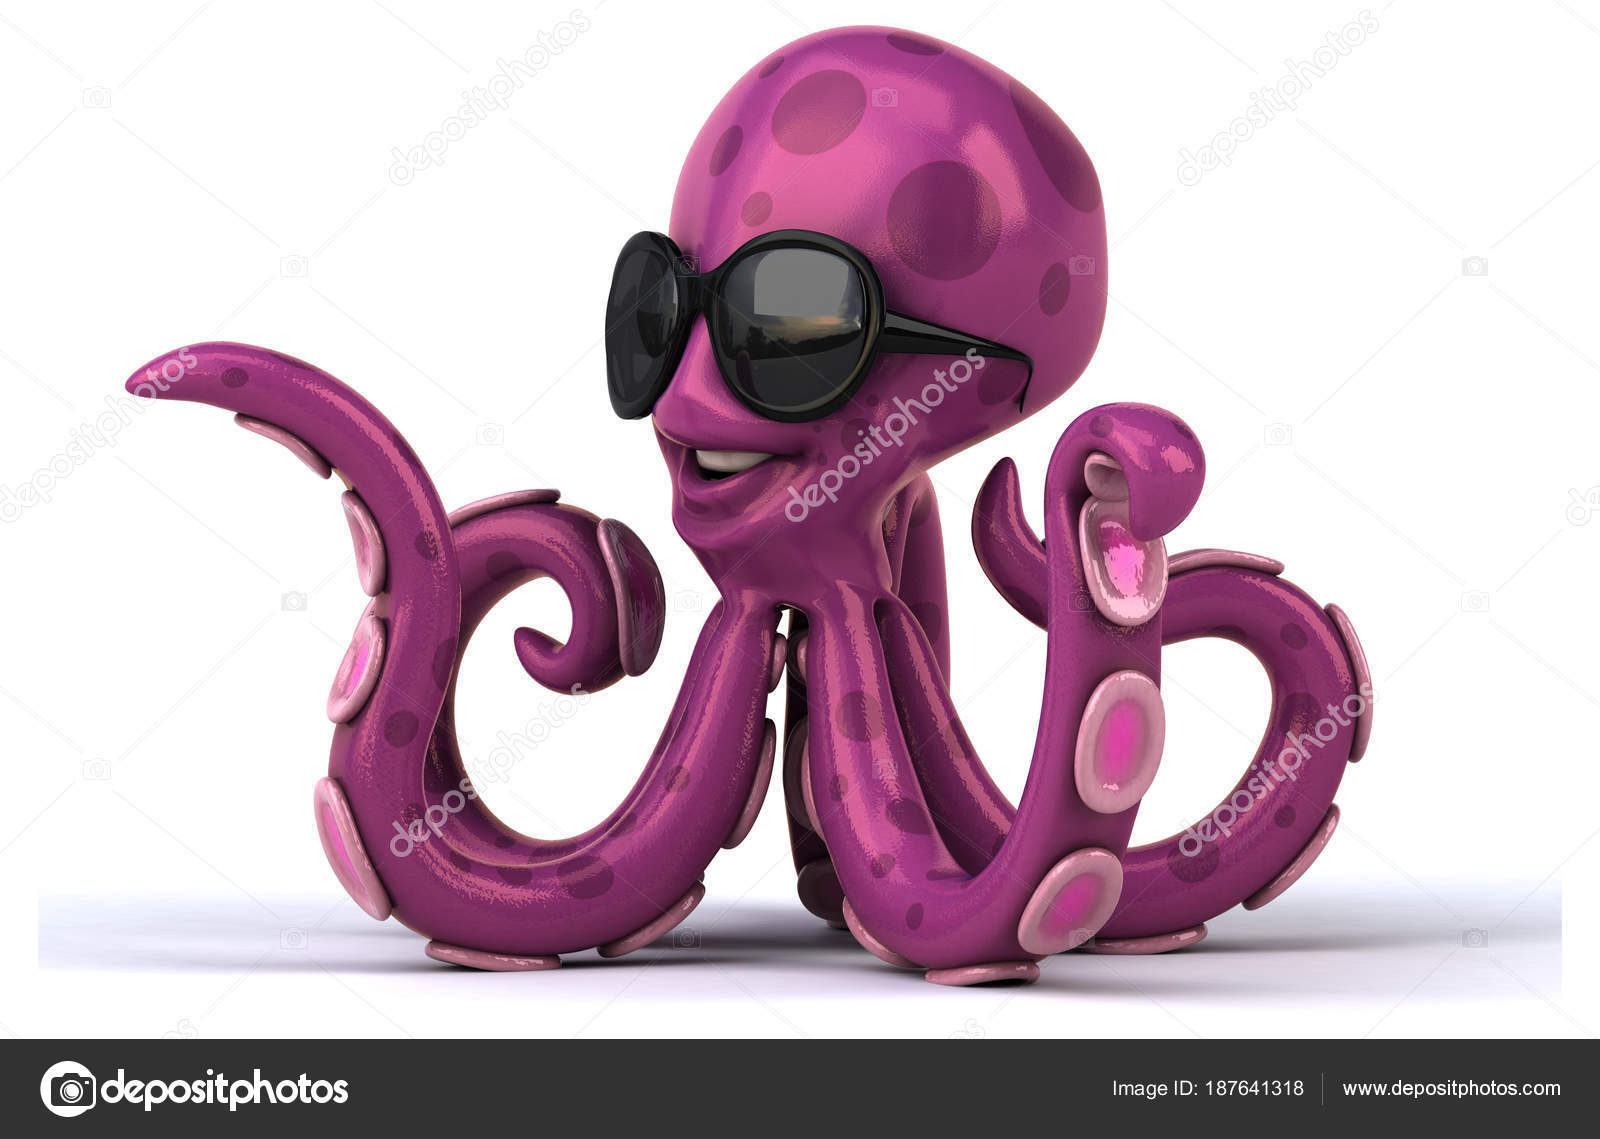 Fun Octopus Cartoon Character Stock Photo by ©julos 187641318